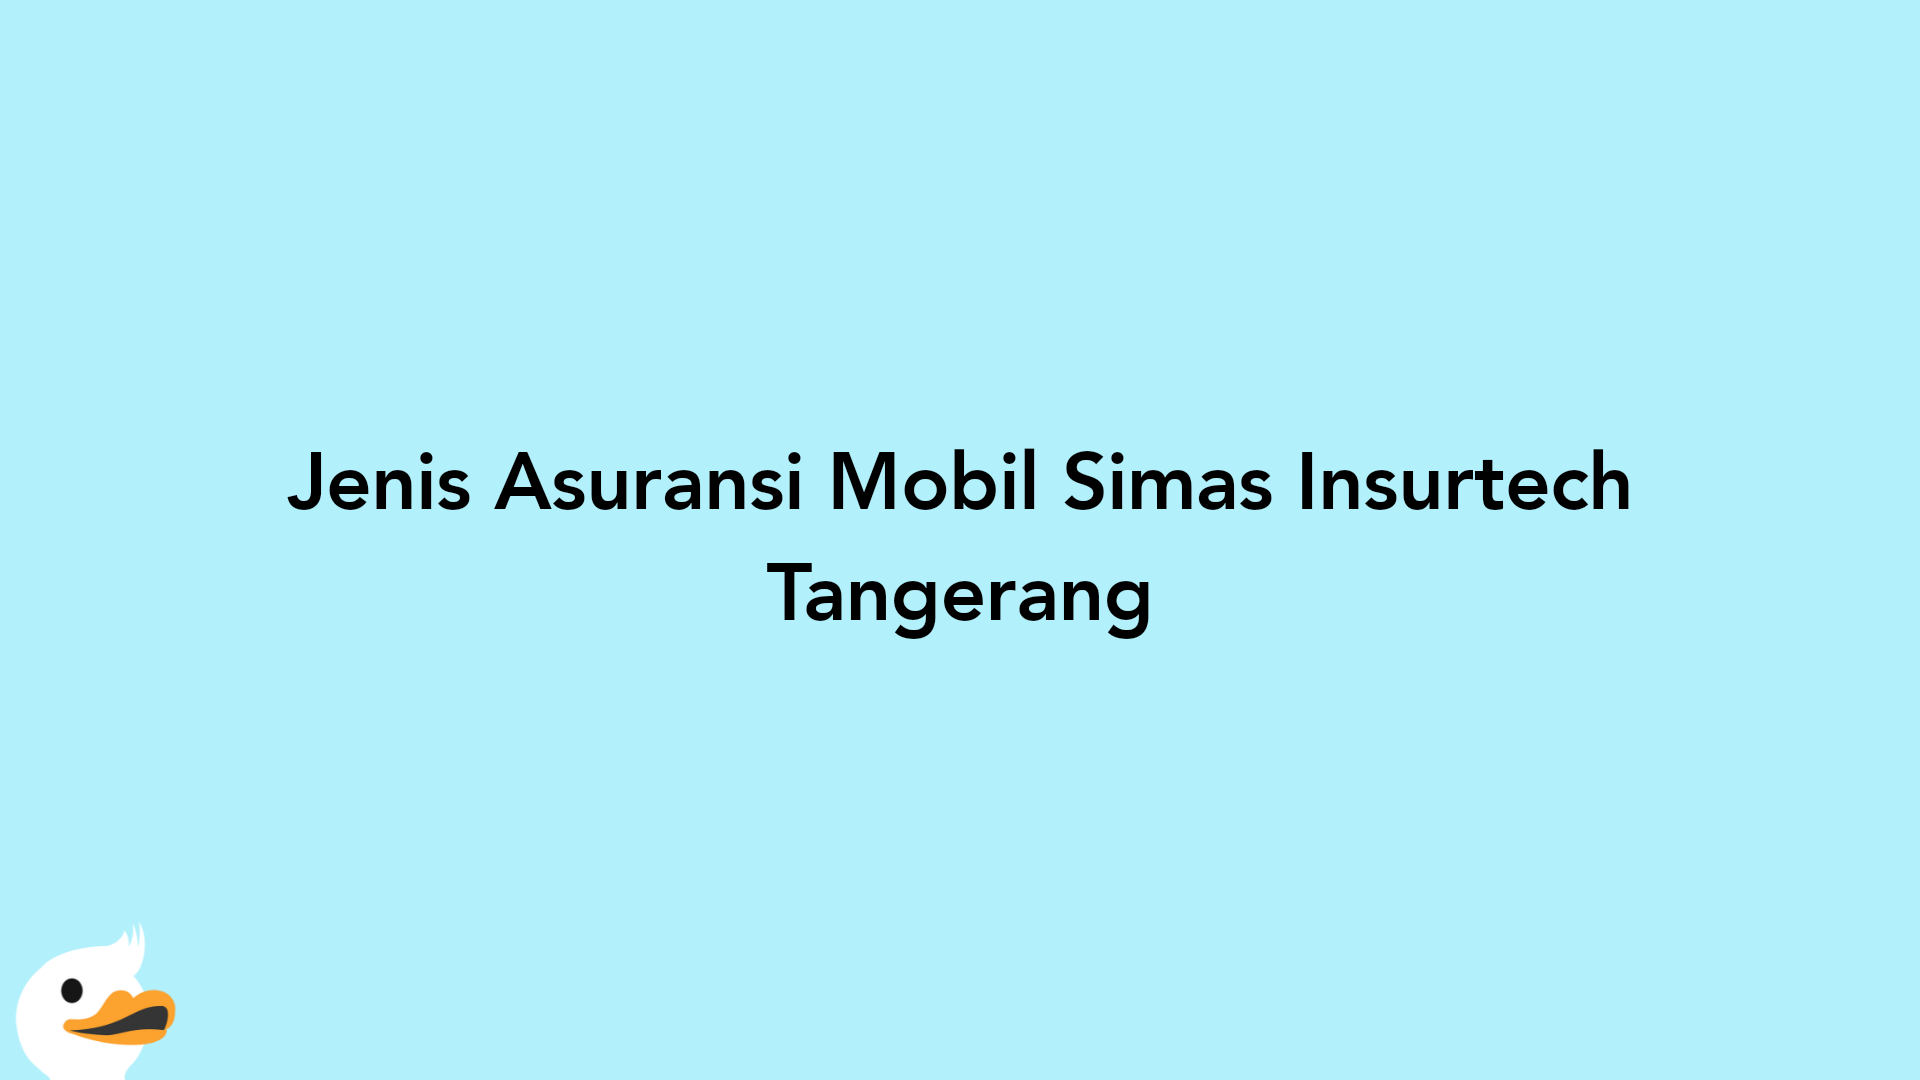 Jenis Asuransi Mobil Simas Insurtech Tangerang